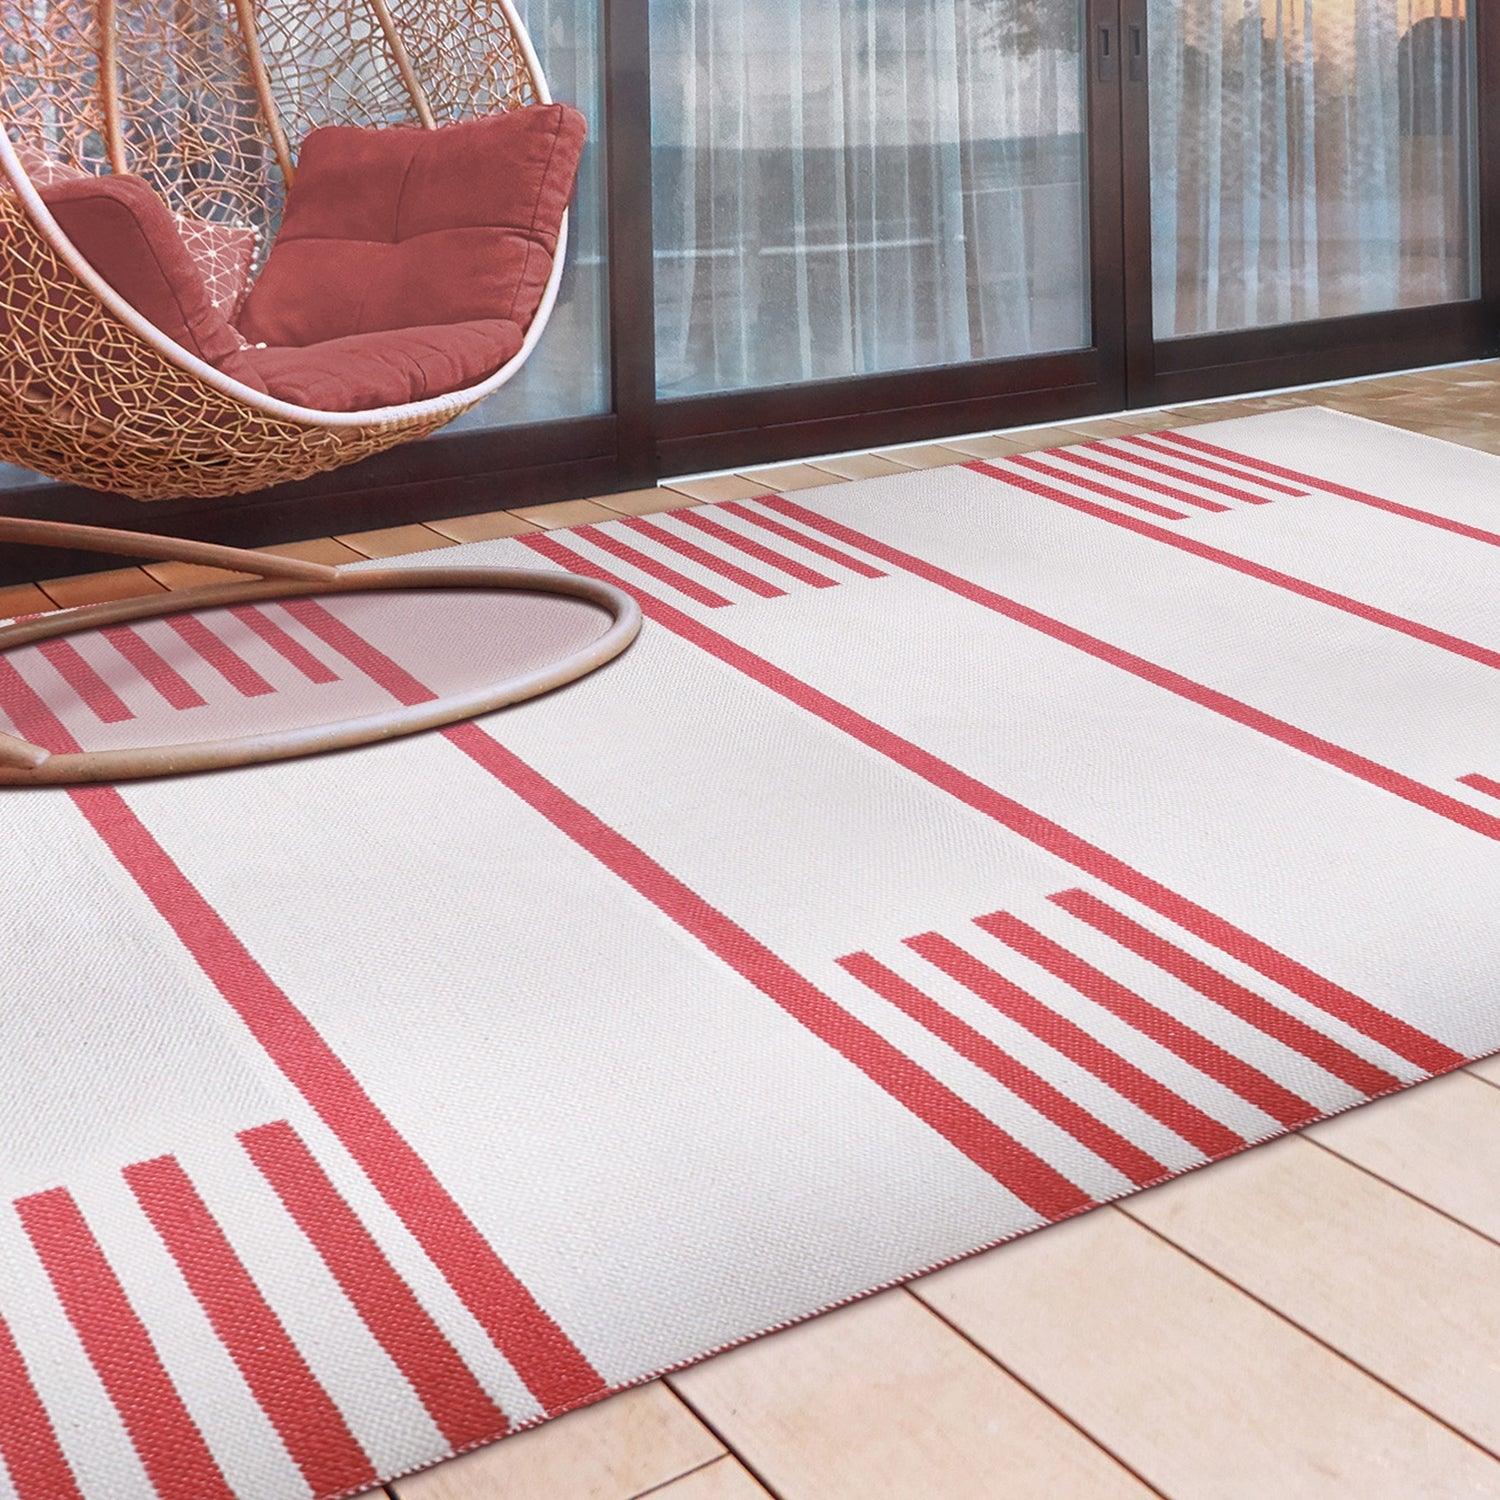  Superior Modern Line Pattern Indoor/ Outdoor Area Rug - Ivory/Red